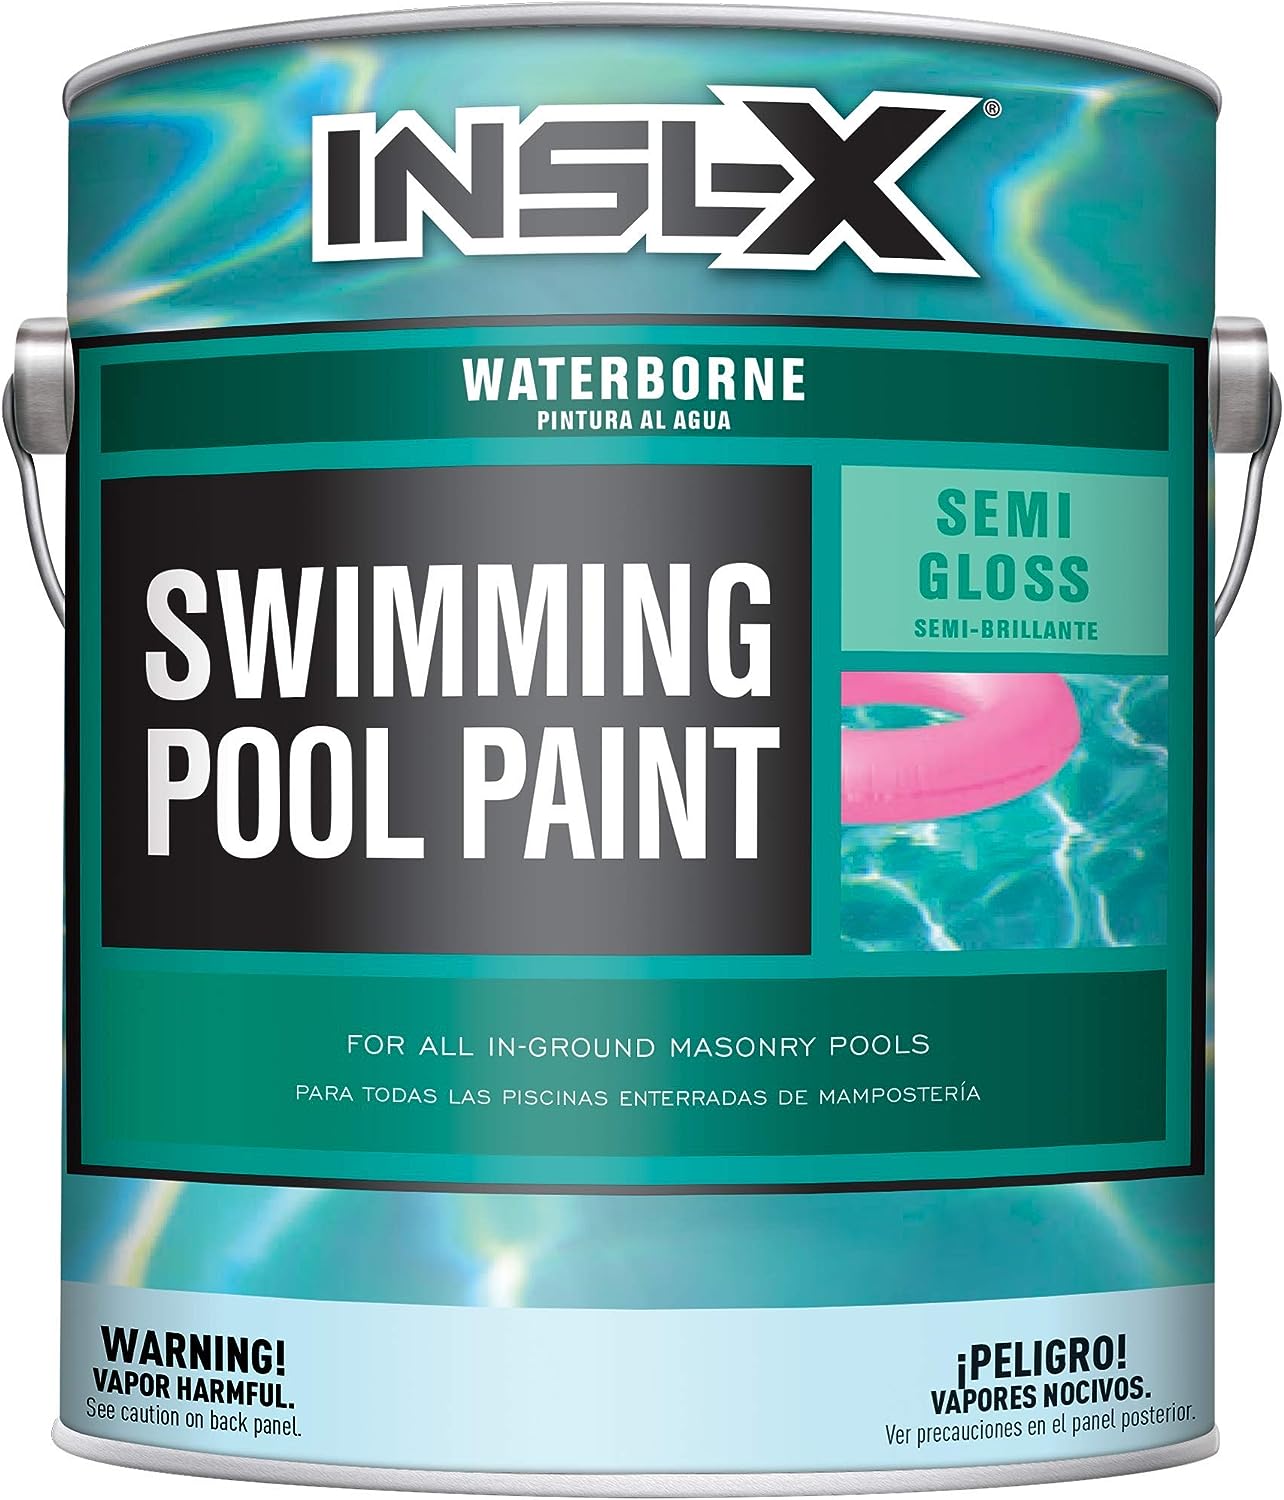 INSL-X Waterborne, Semi-Gloss Acrylic Pool Paint, [...]